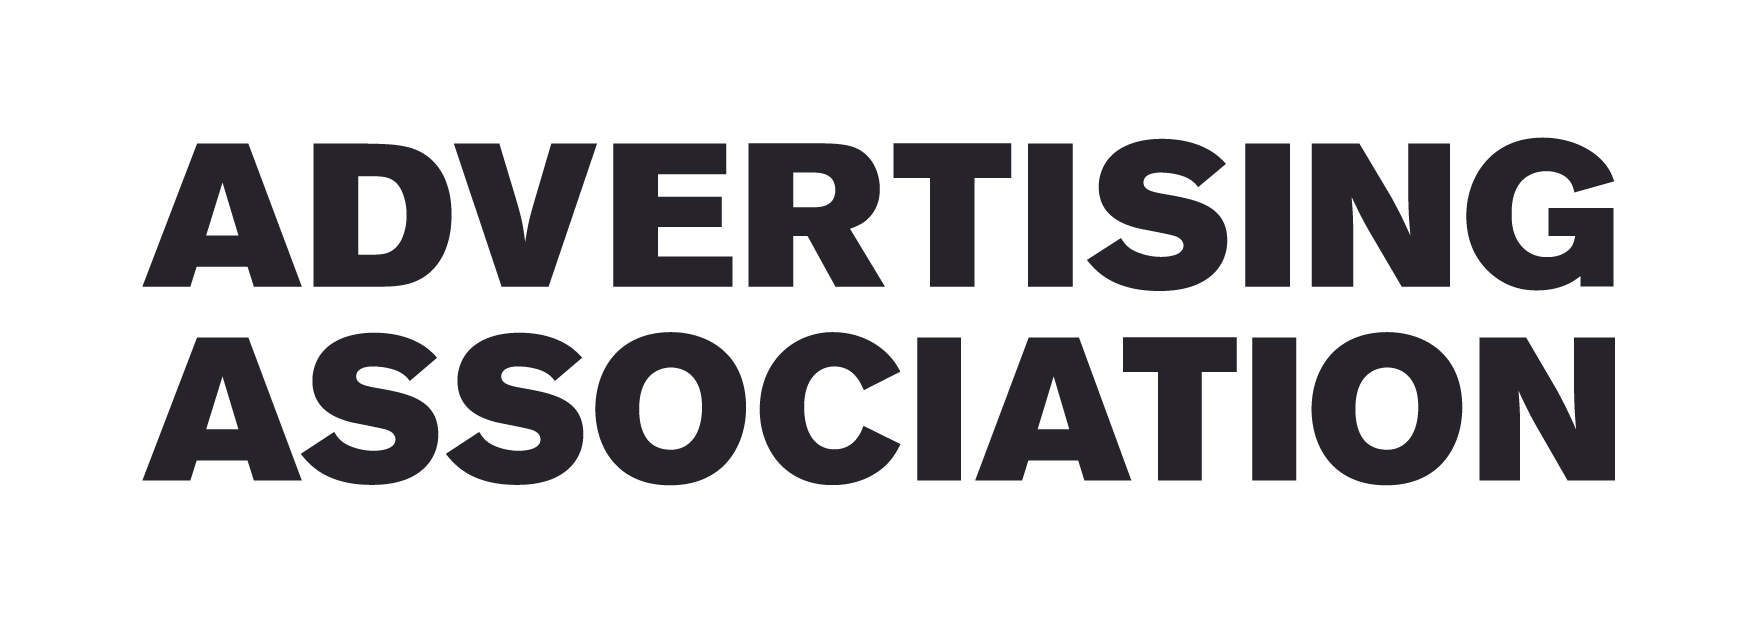 Advertising Association logo